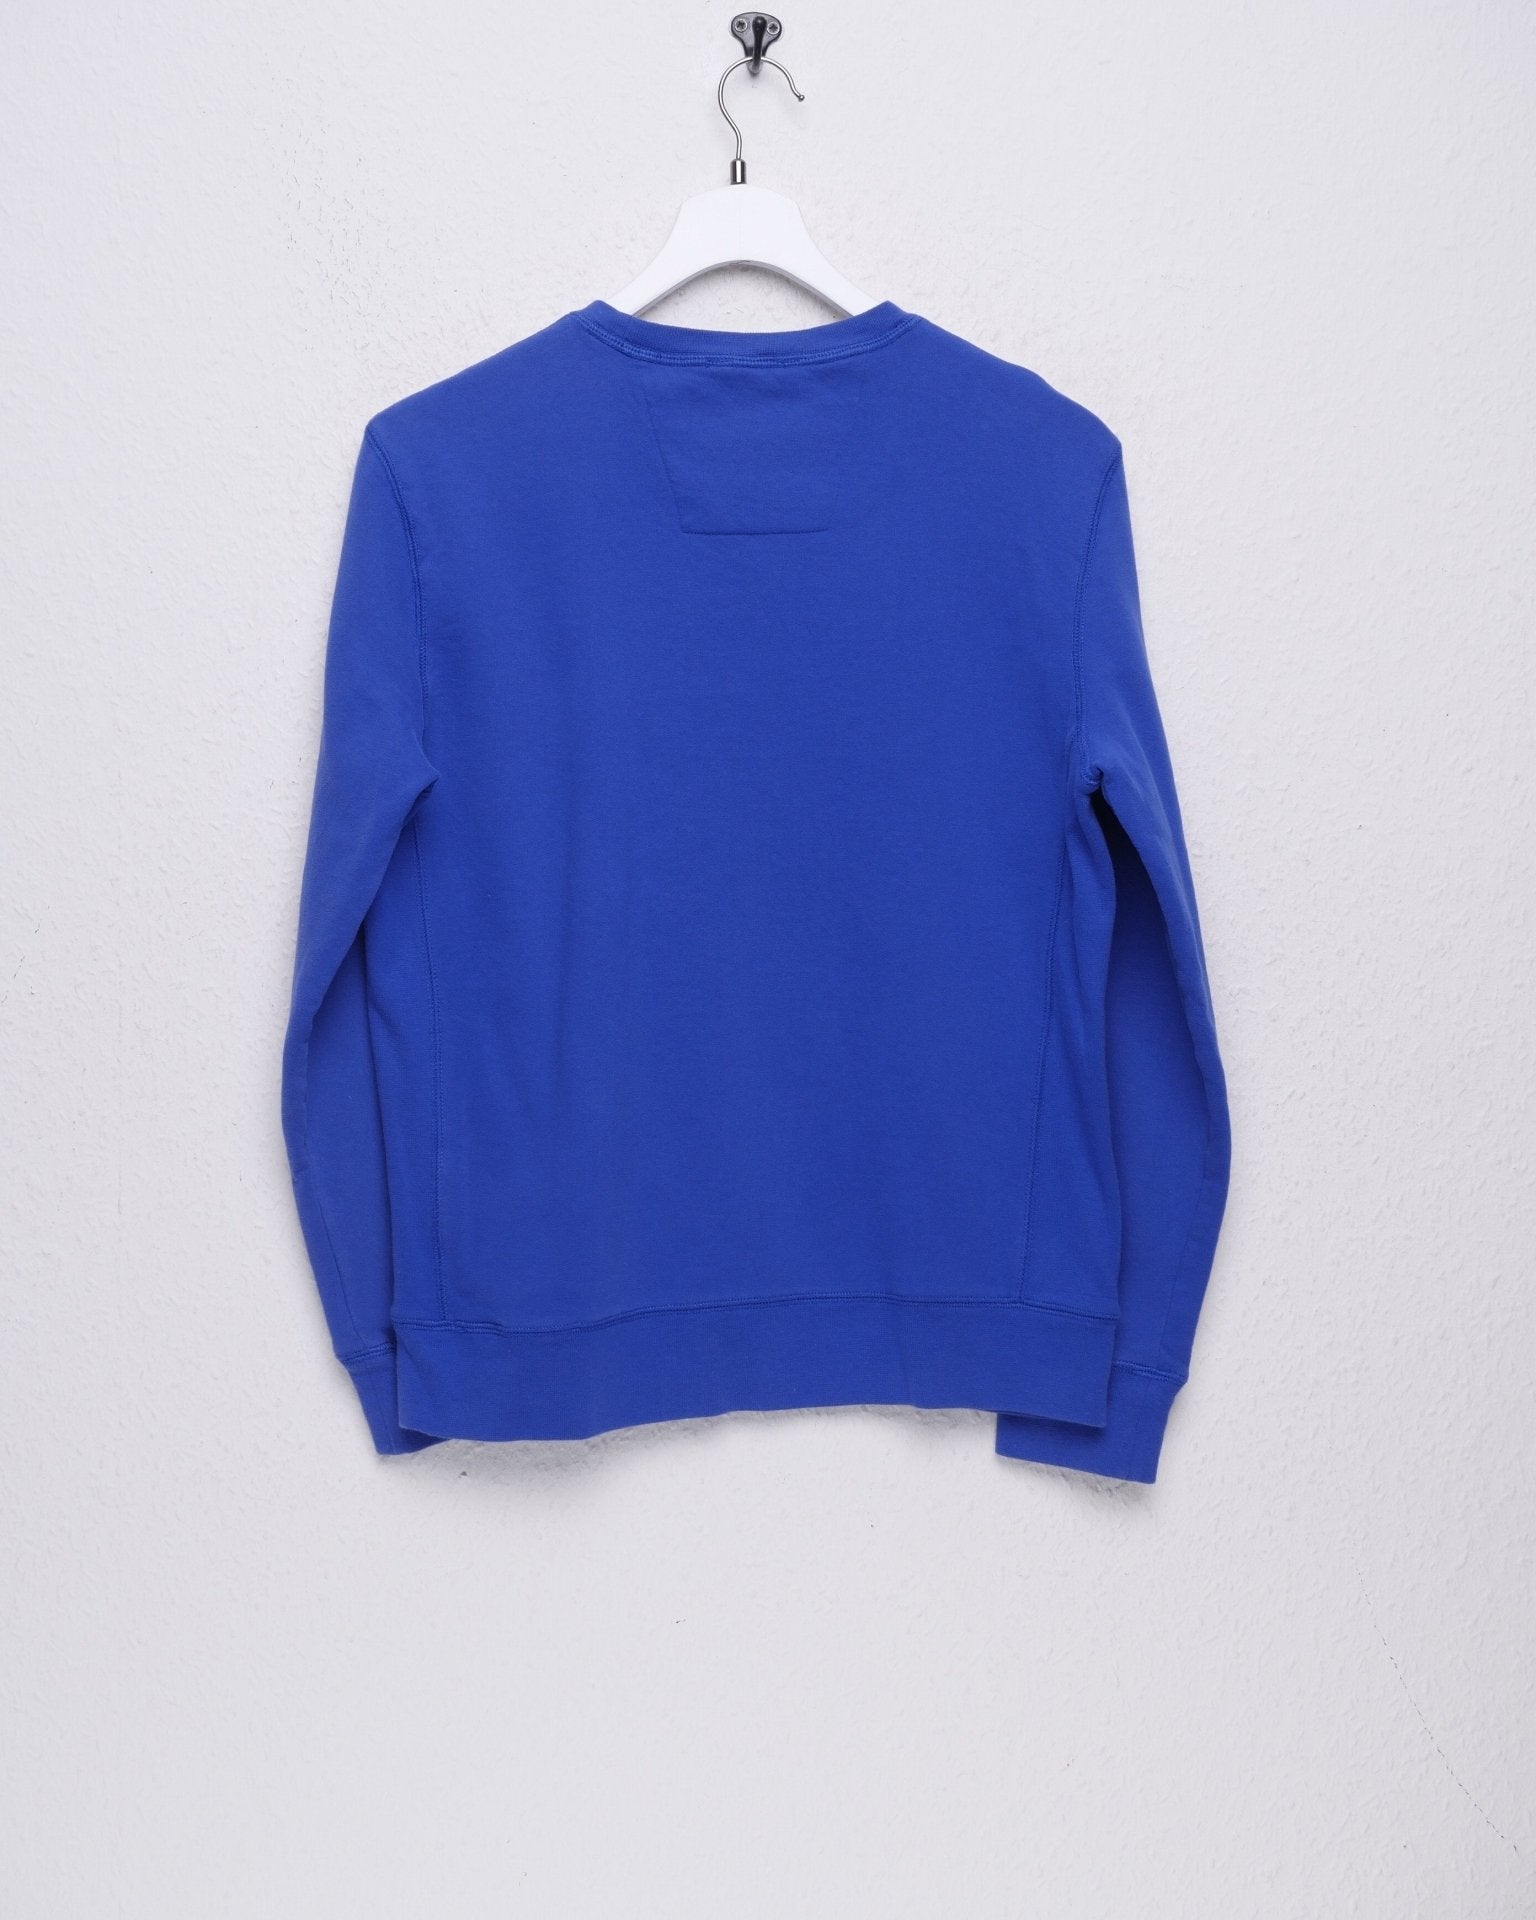 Nautica embroidered Logo blue Sweater - Peeces